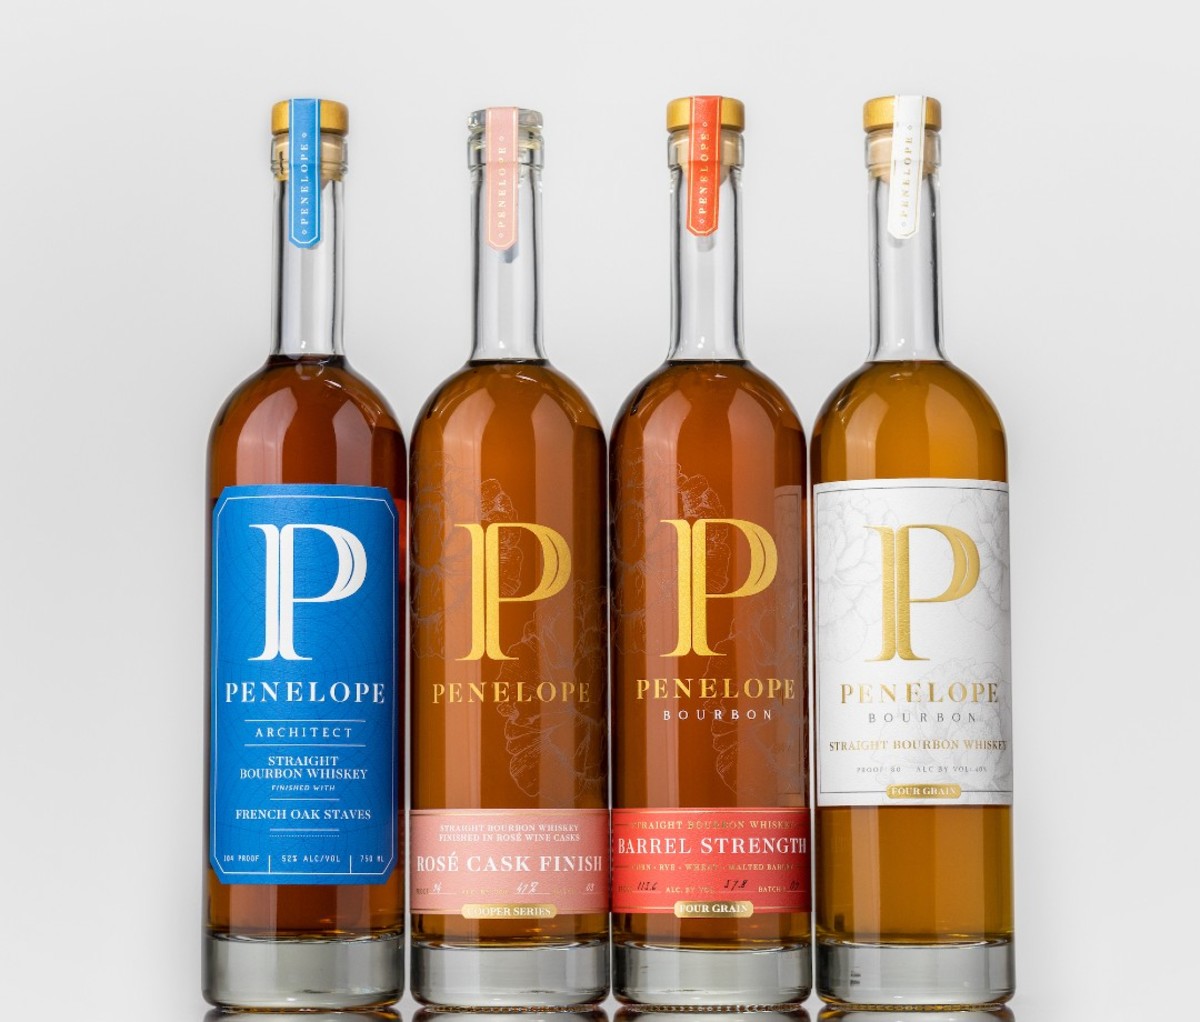 A selection of Penelope Bourbon bottles